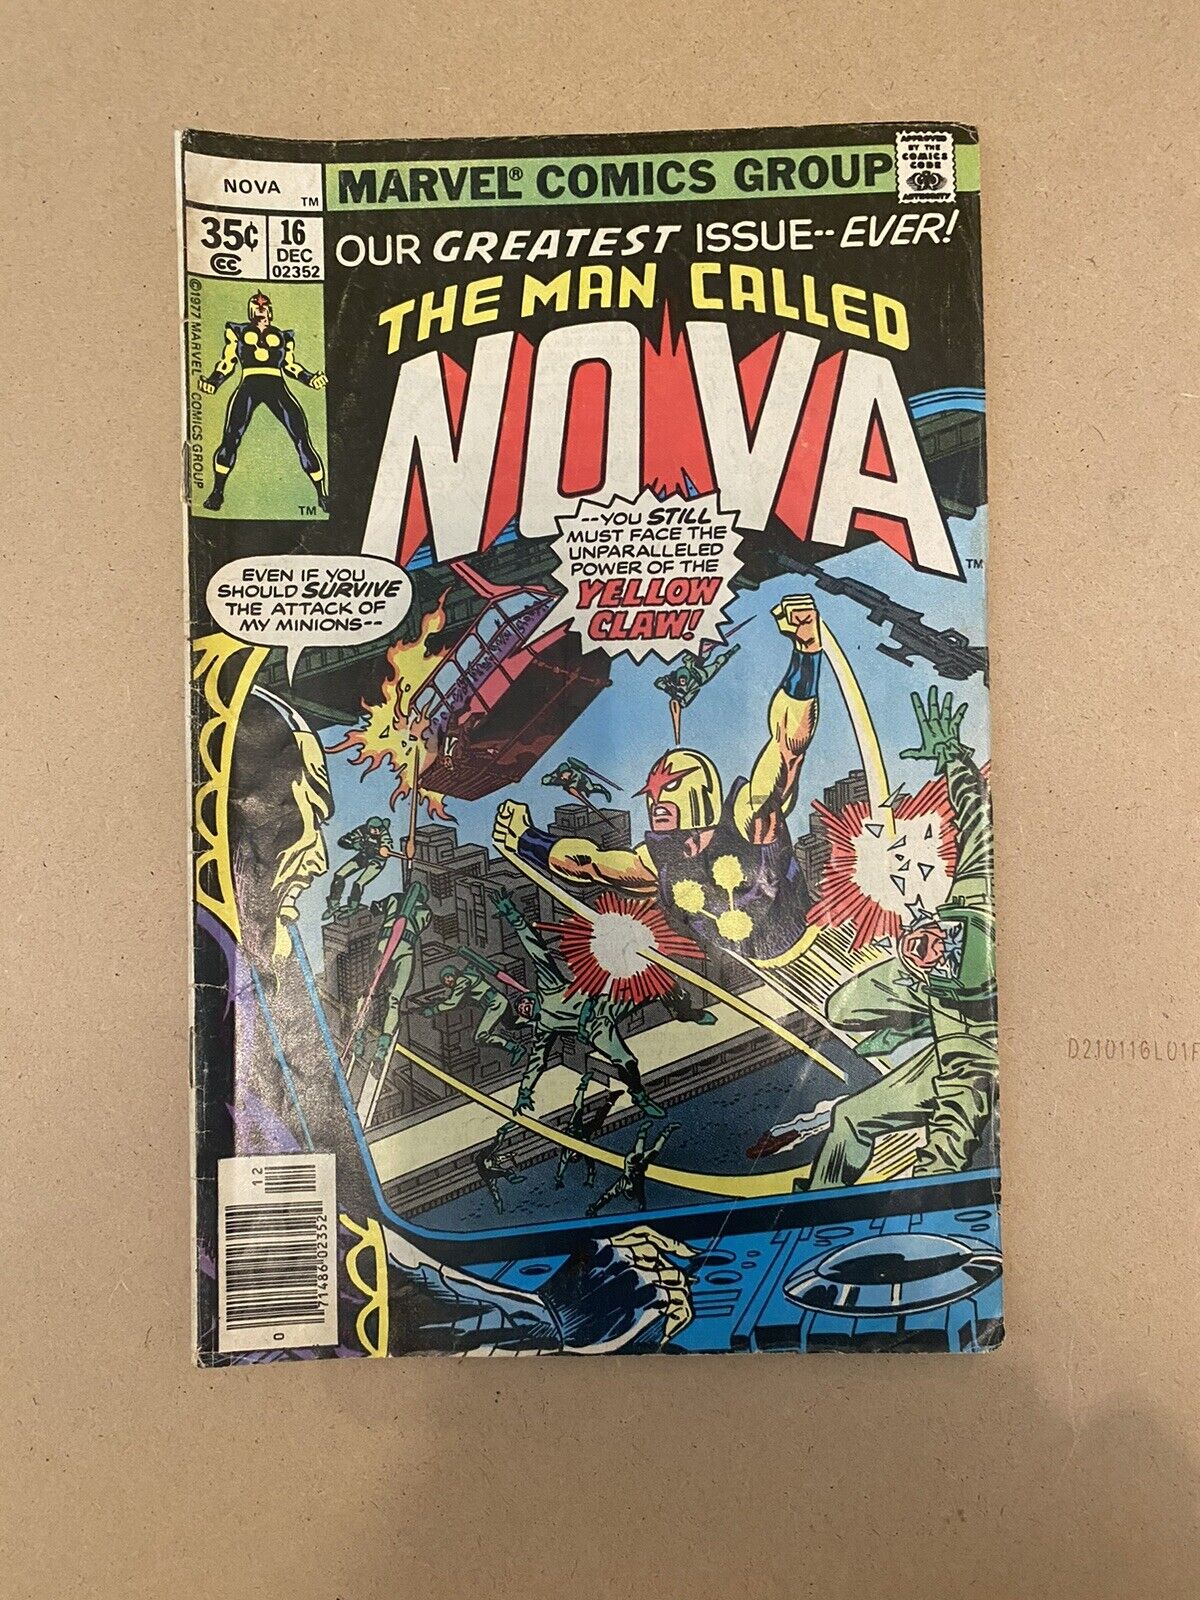 The Man Called Nova, Marvel Comic #16